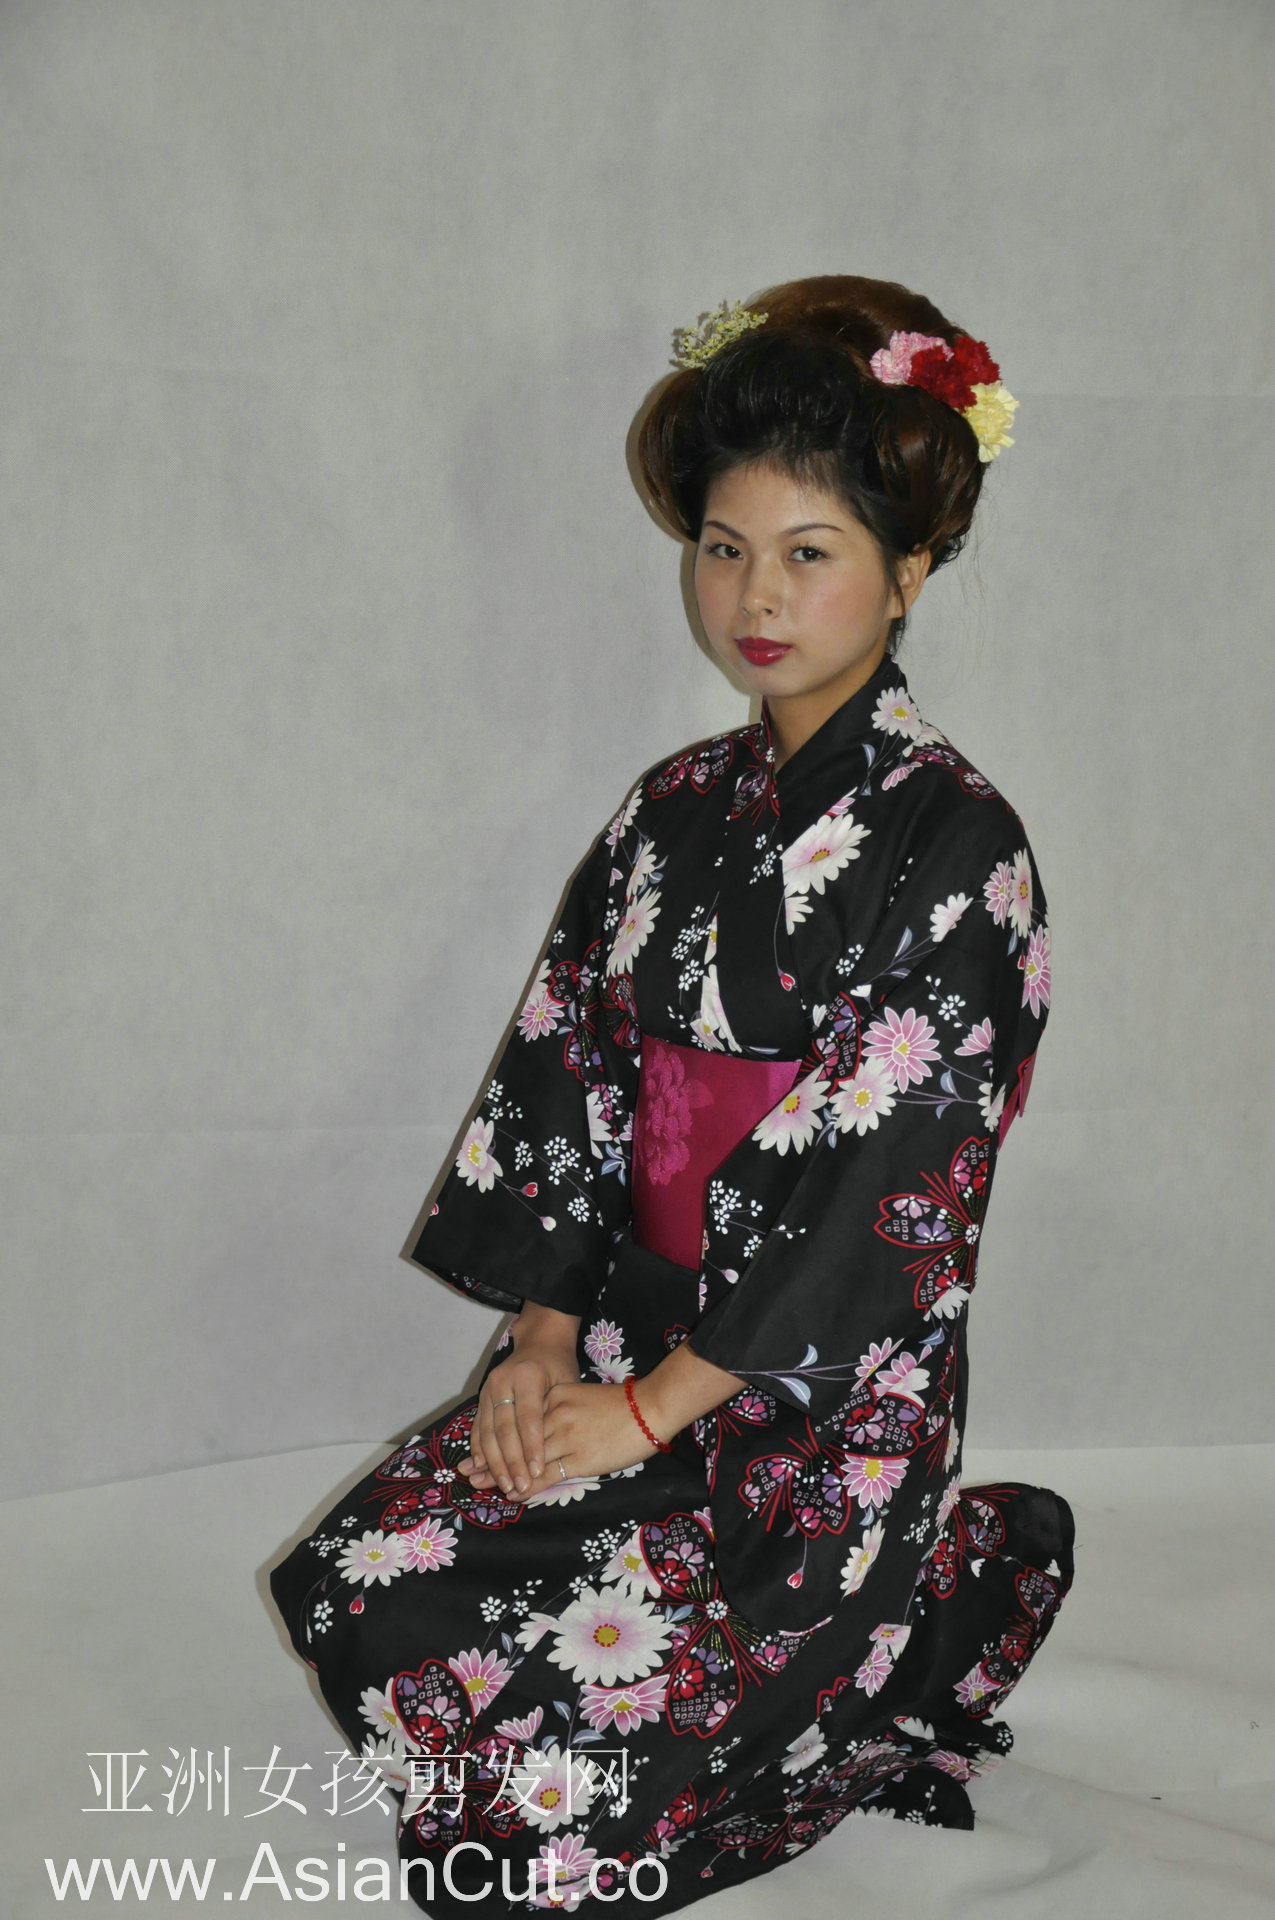 AC-BLD-V008 - Japanese Kimono Dress headshave and eyebrow shaved